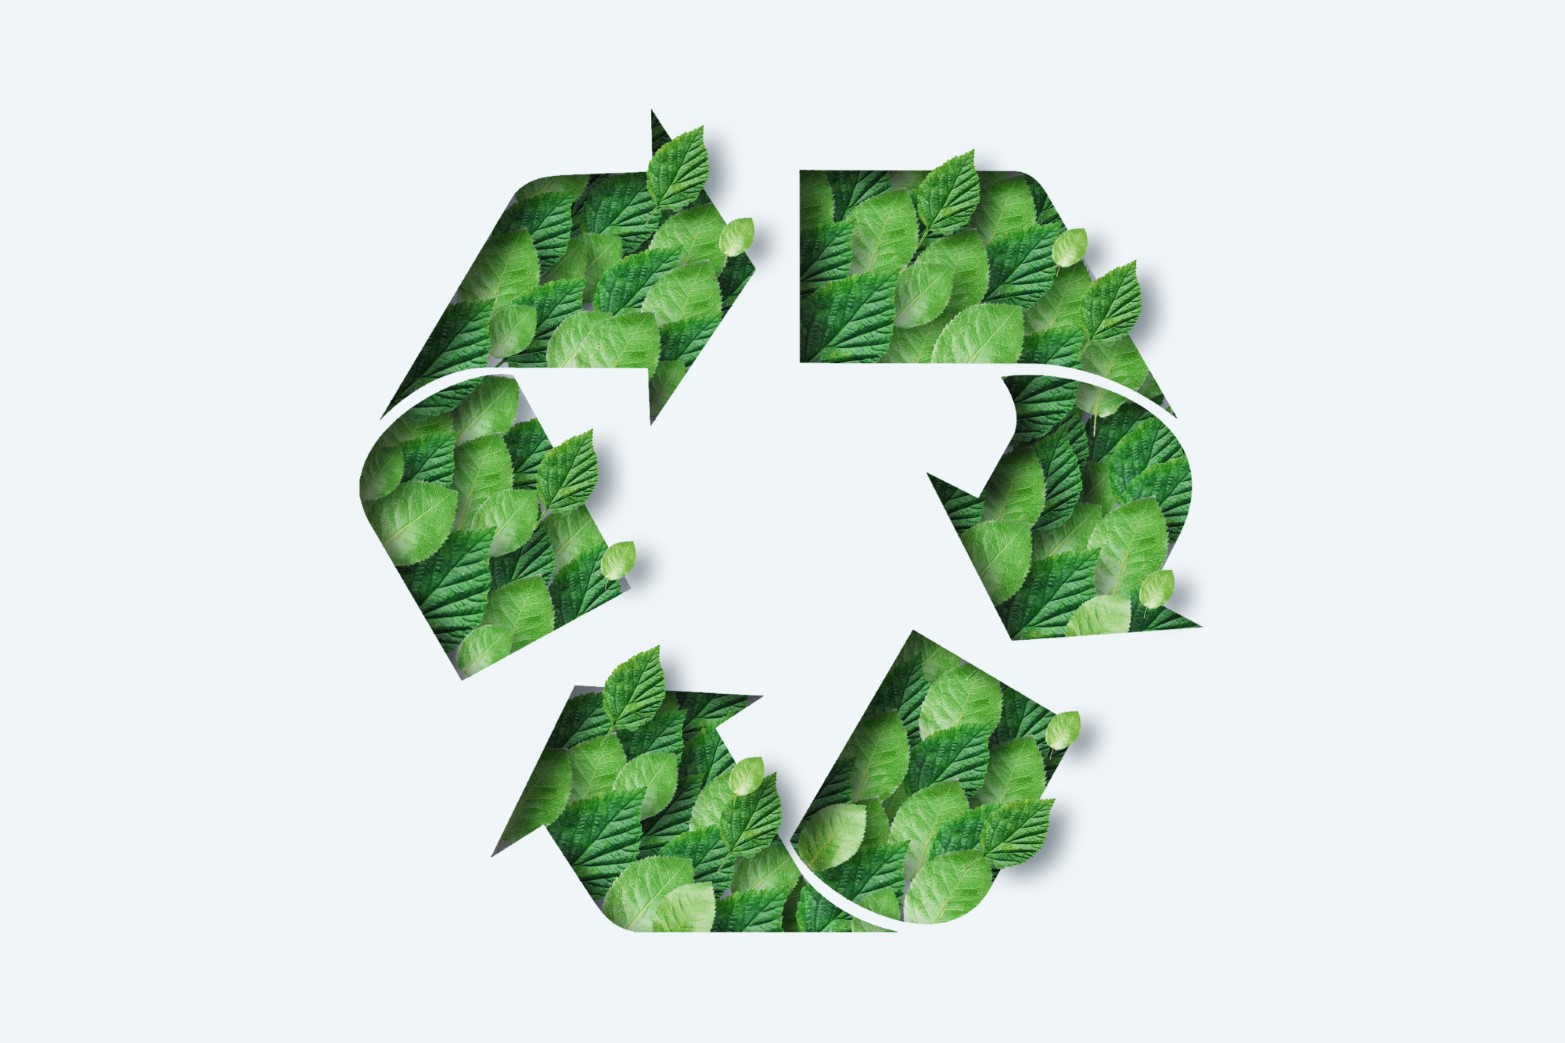 Environmental Waste Management Diploma